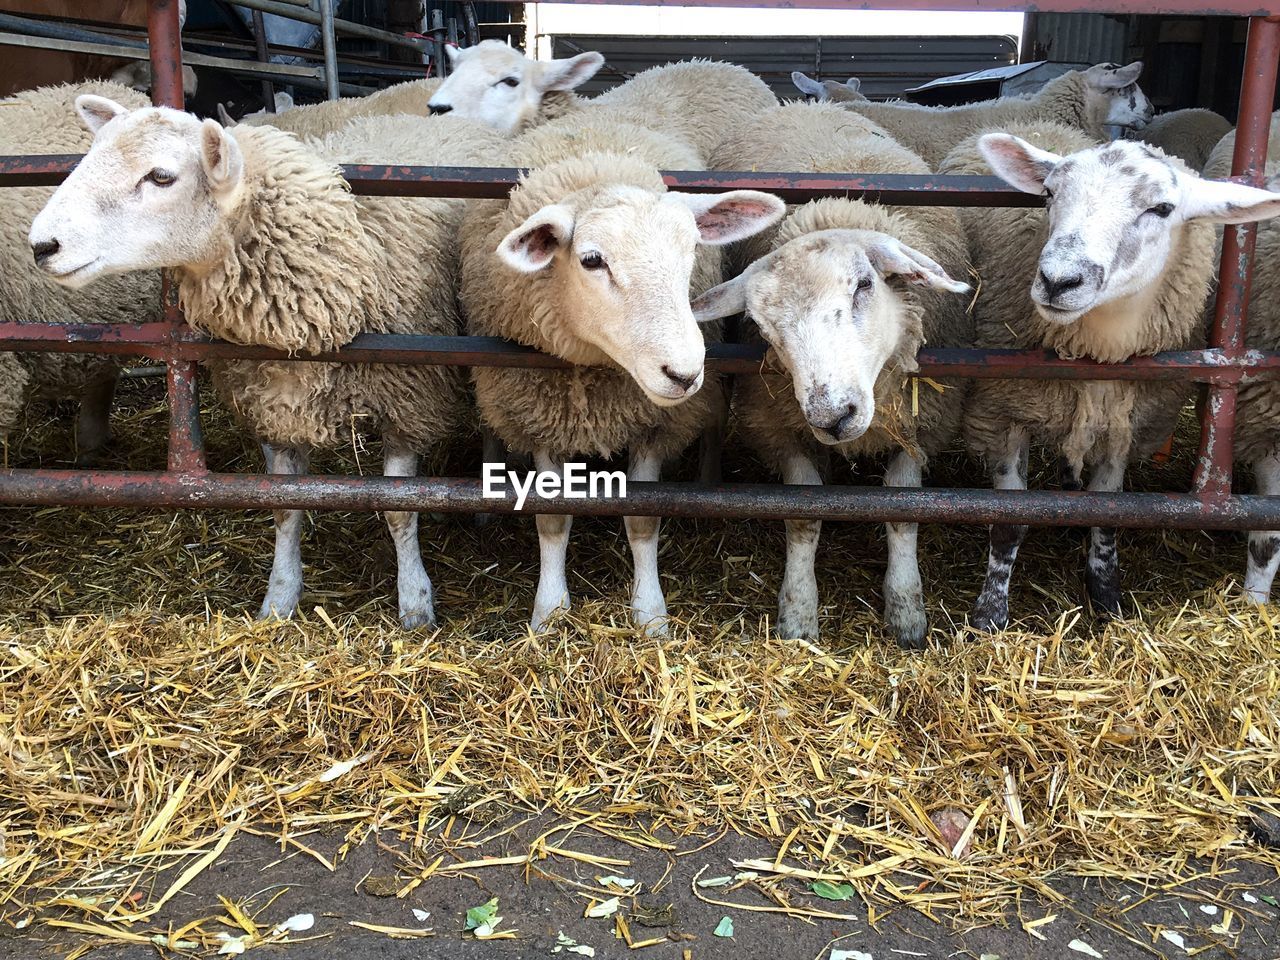 Flock of sheep standing in animal pen